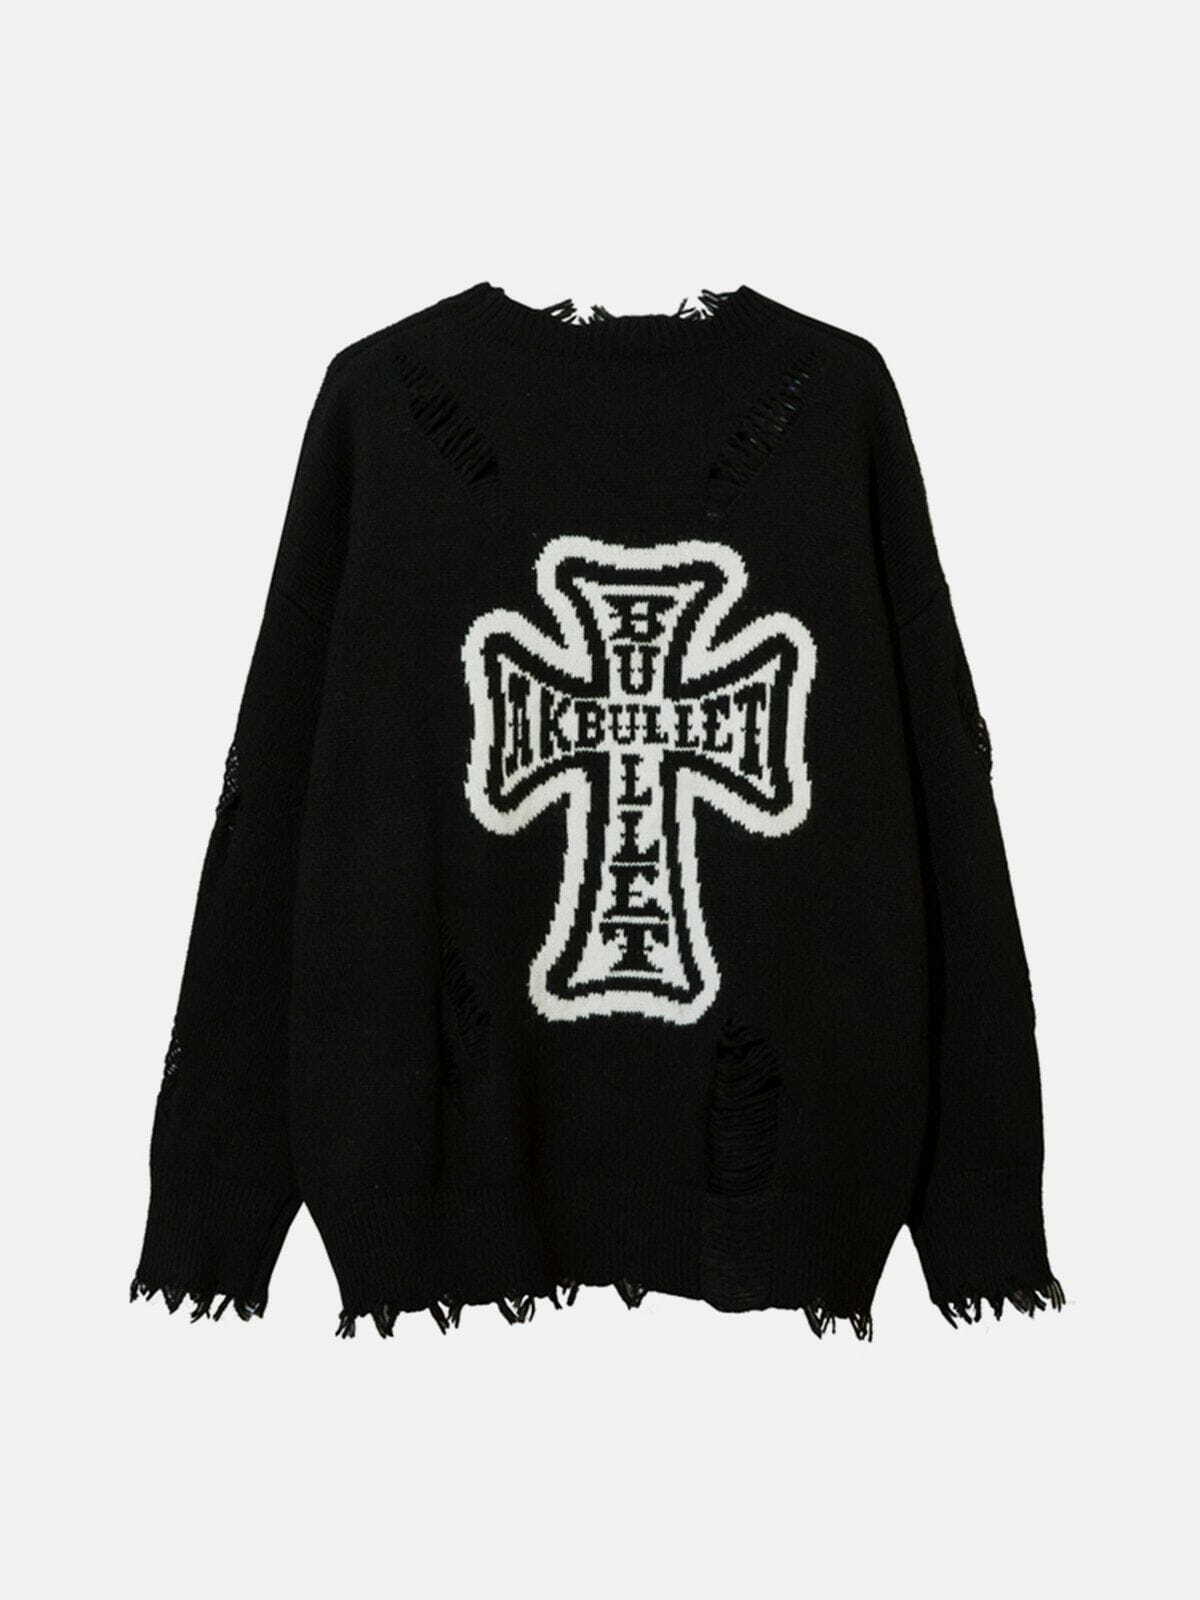 graphic cross sweater edgy & retro streetwear 7908